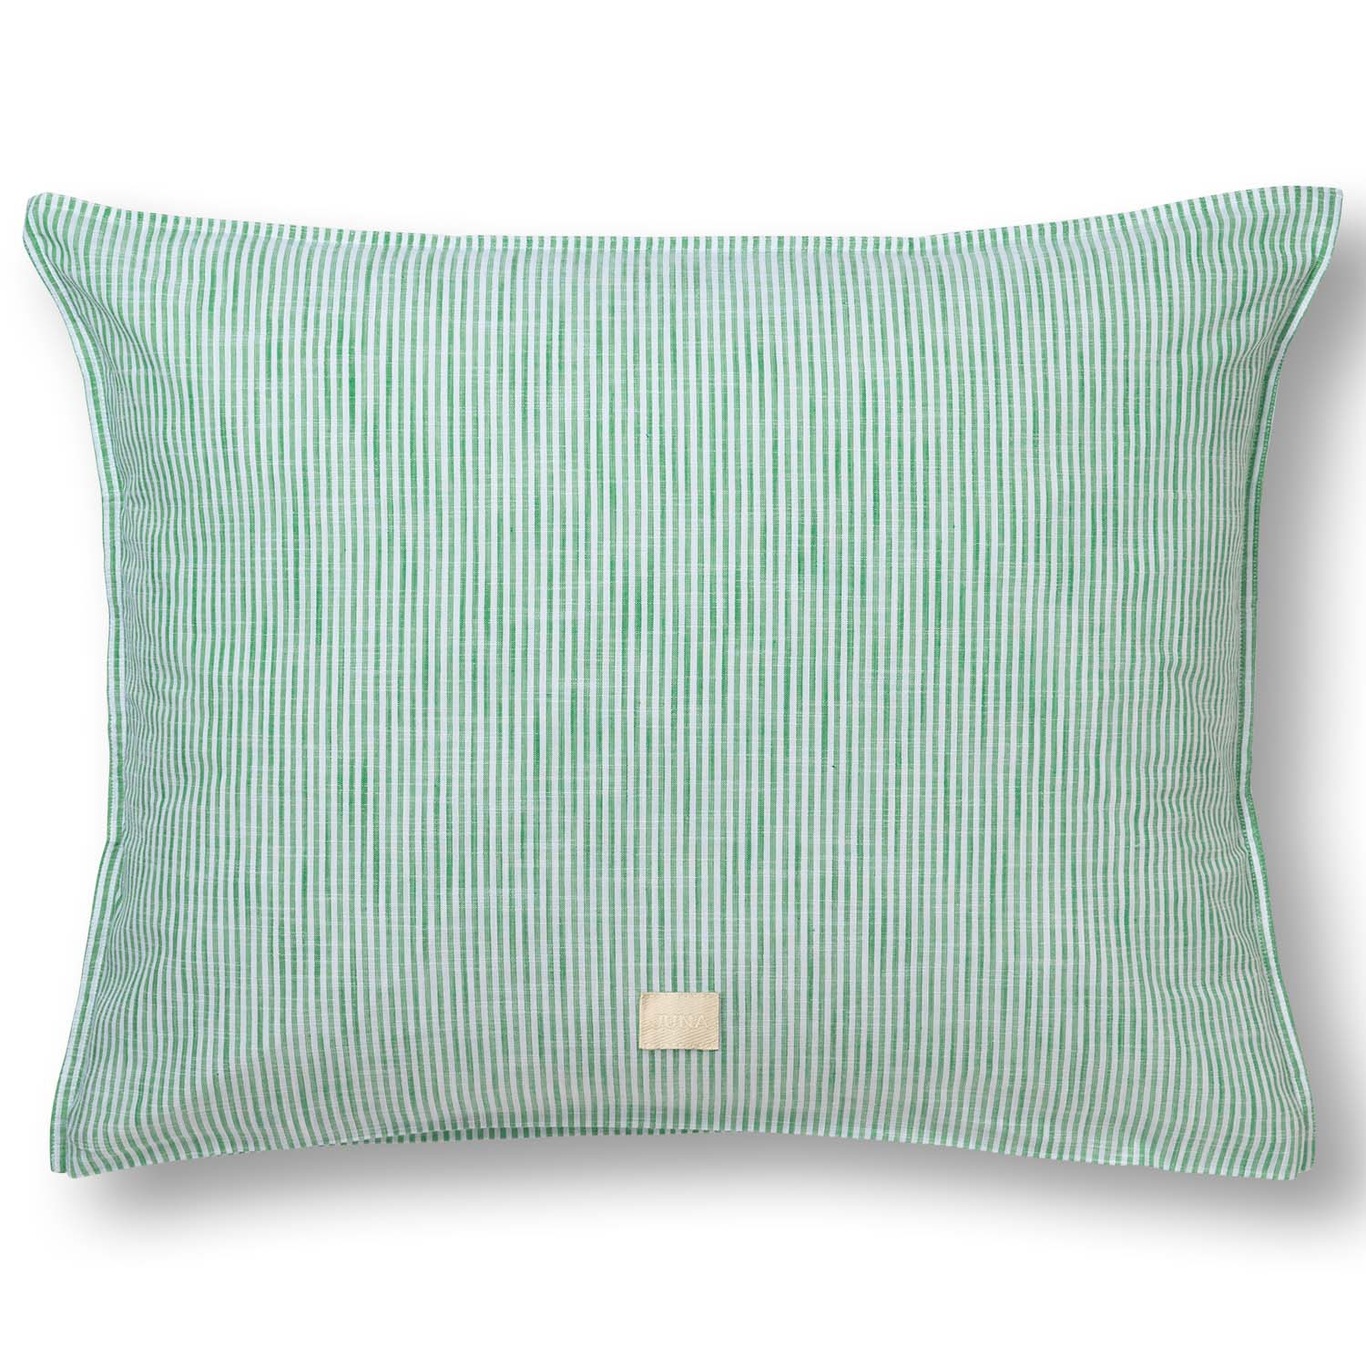 Monochrome Lines Pillowcase 50x70 cm, Green